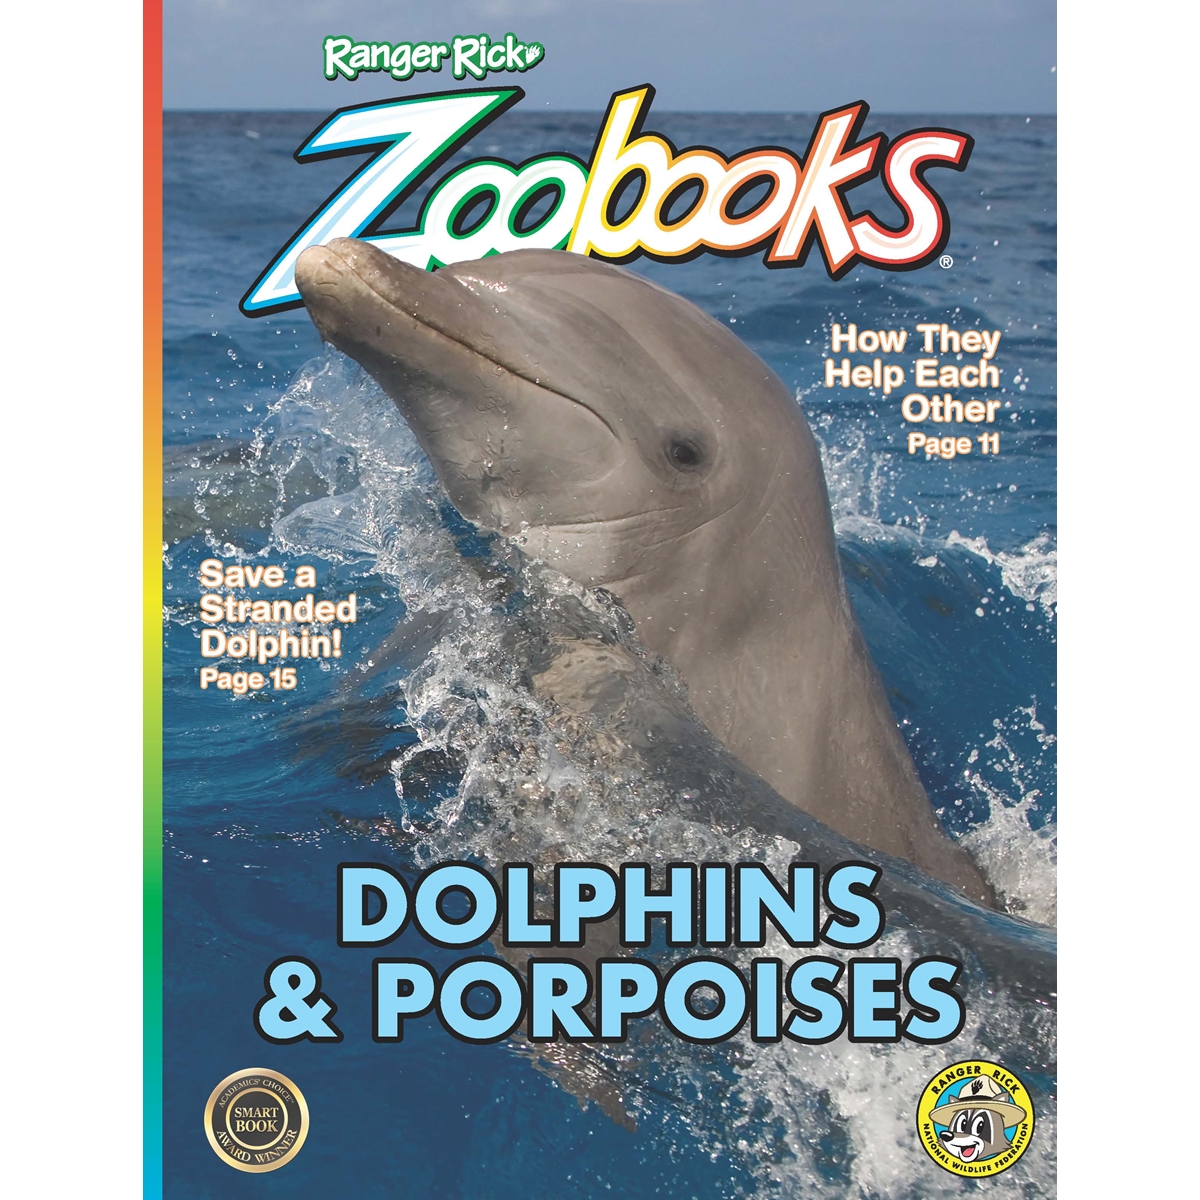 Ranger Rick Zoobooks 1 year Subscription